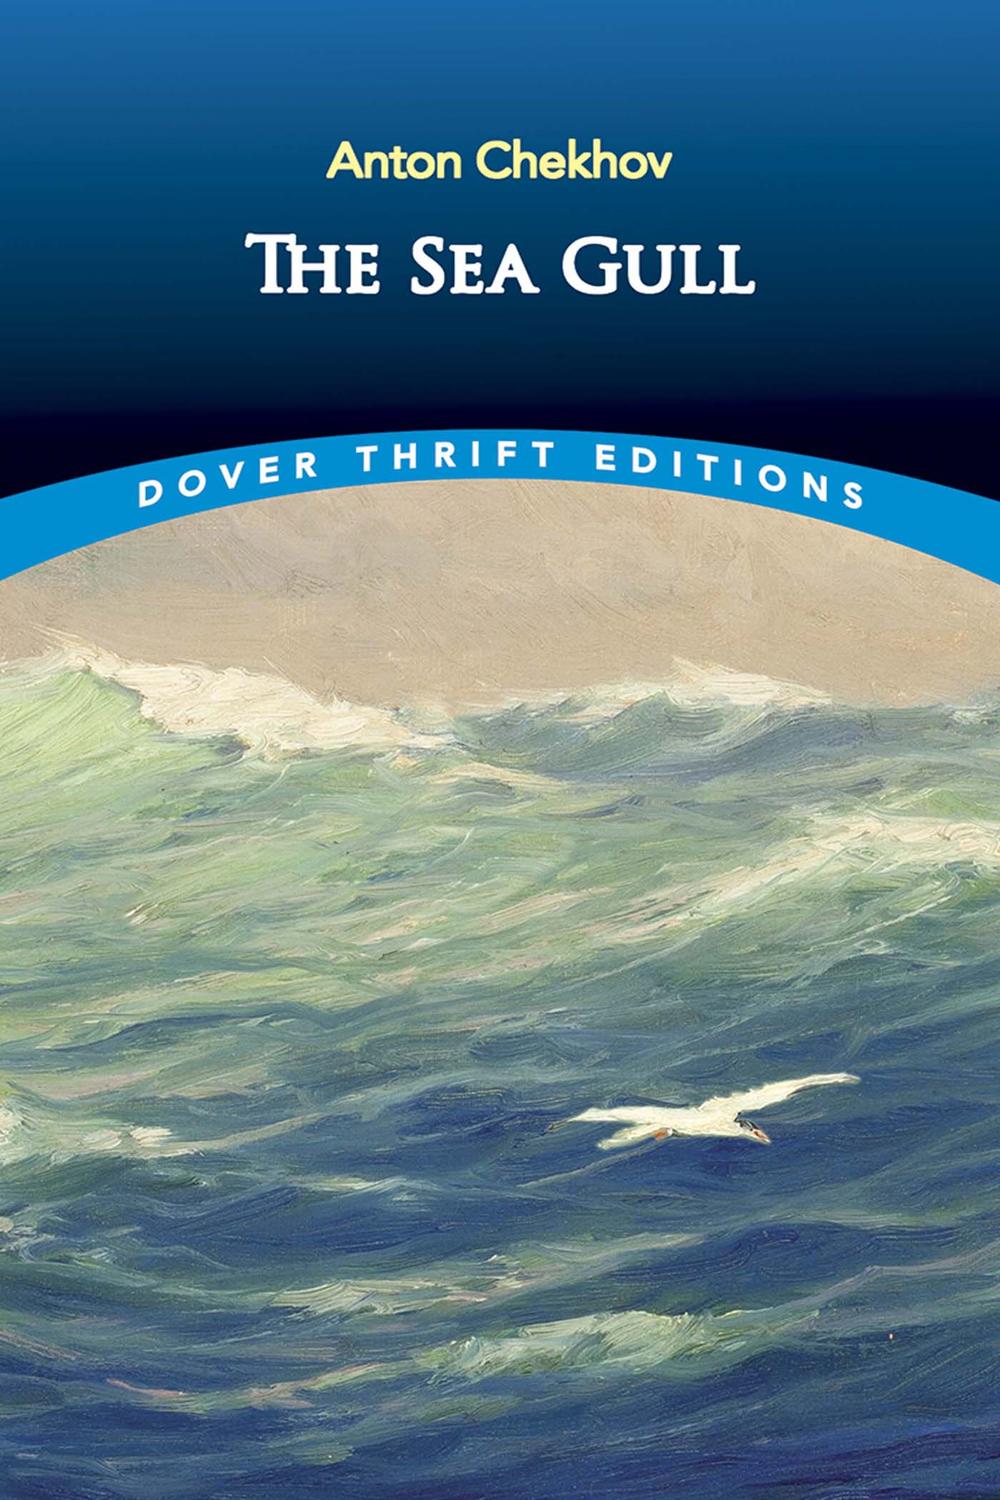 The Sea Gull - Anton Chekhov